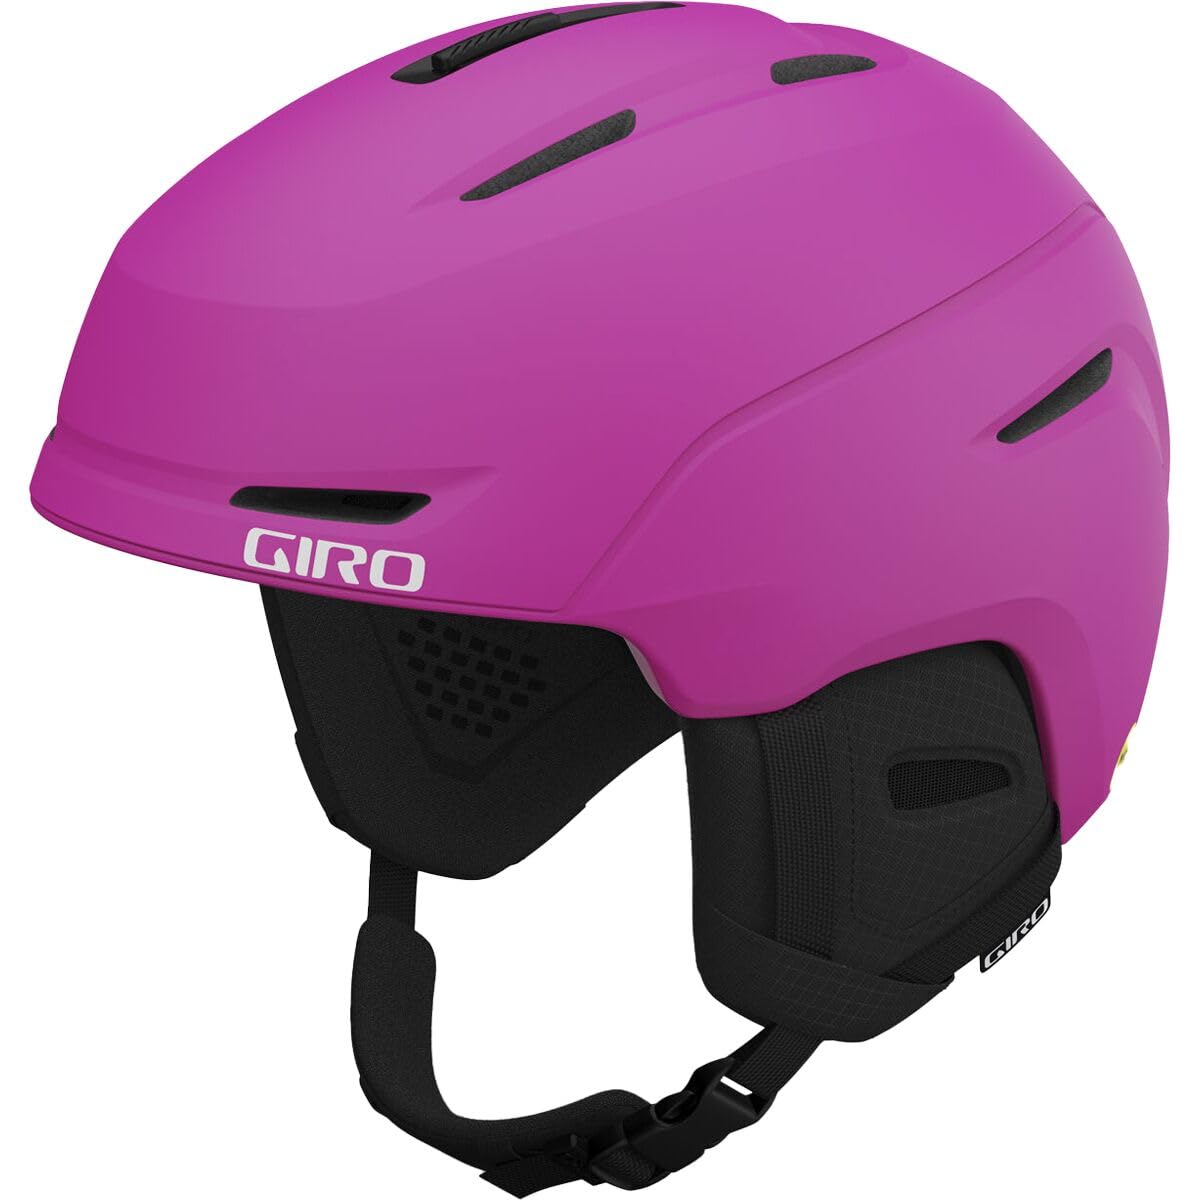 Giro Neo Jr. MIPS Kids Ski Helmet - Snowboard Helmet for Youth Boys Girls - Matte Rhodamine - M 55.5-59cm並行輸入品